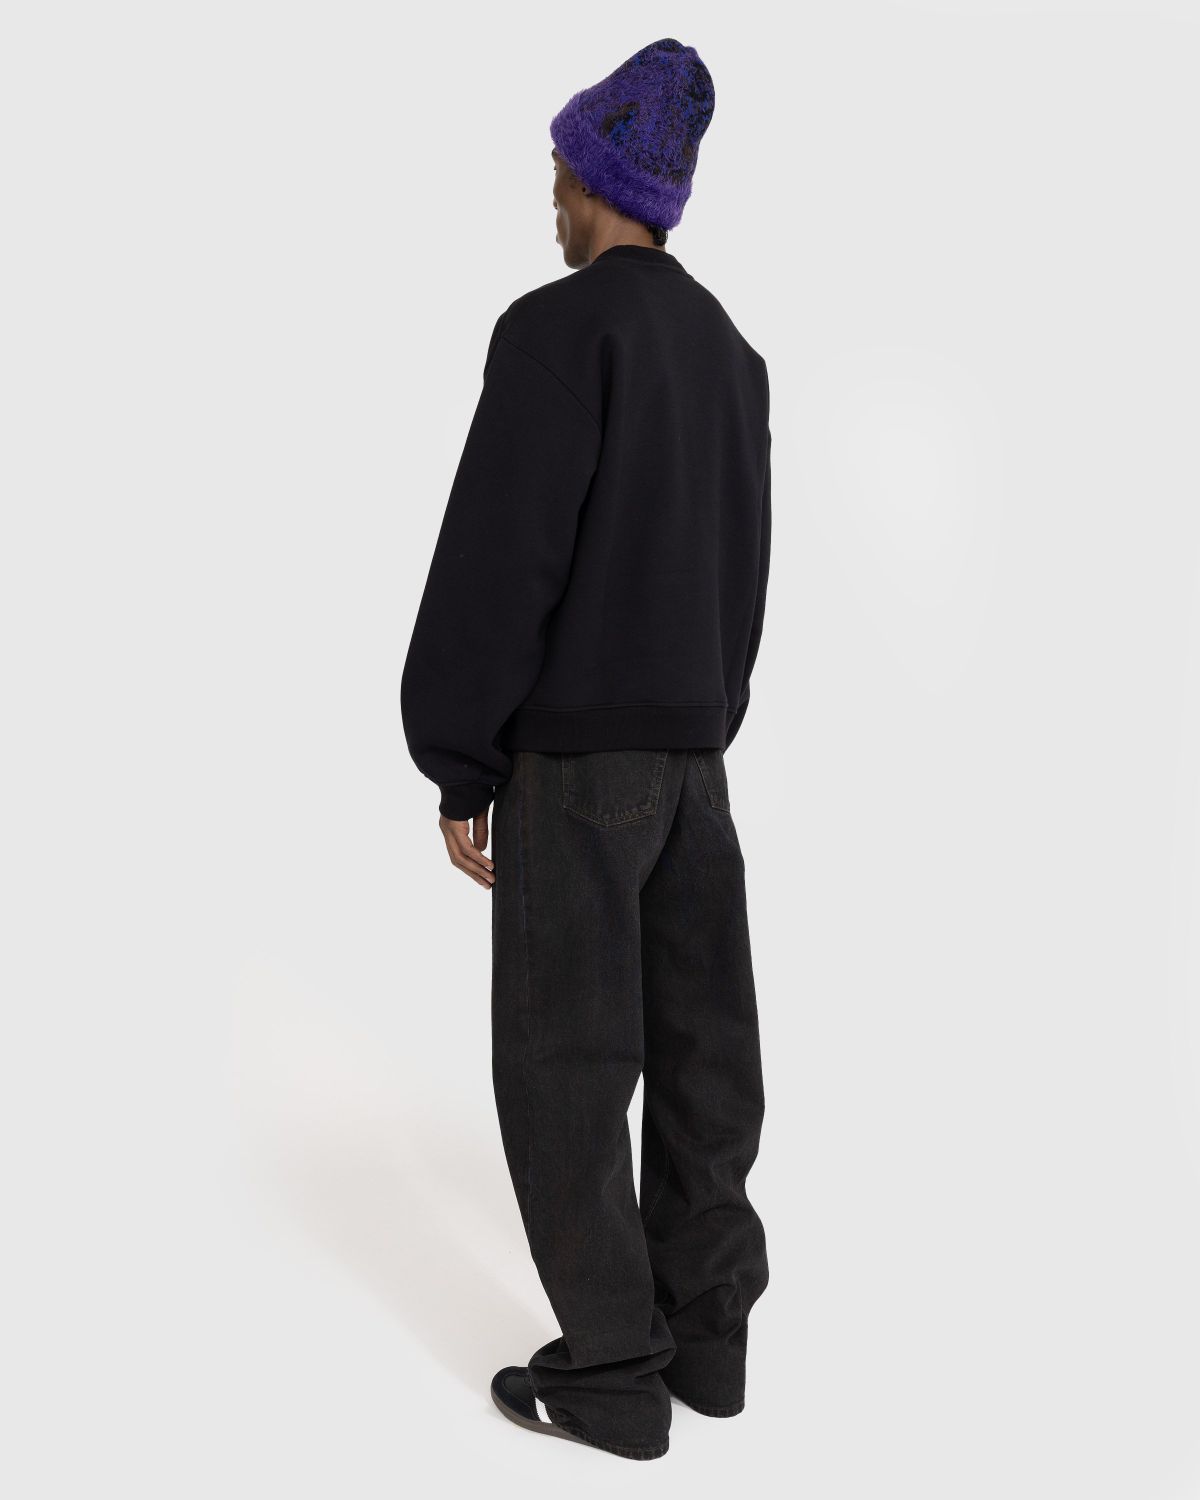 Y/Project – Paris' Best Embroidered Sweatshirt Black - Knitwear - Black - Image 2